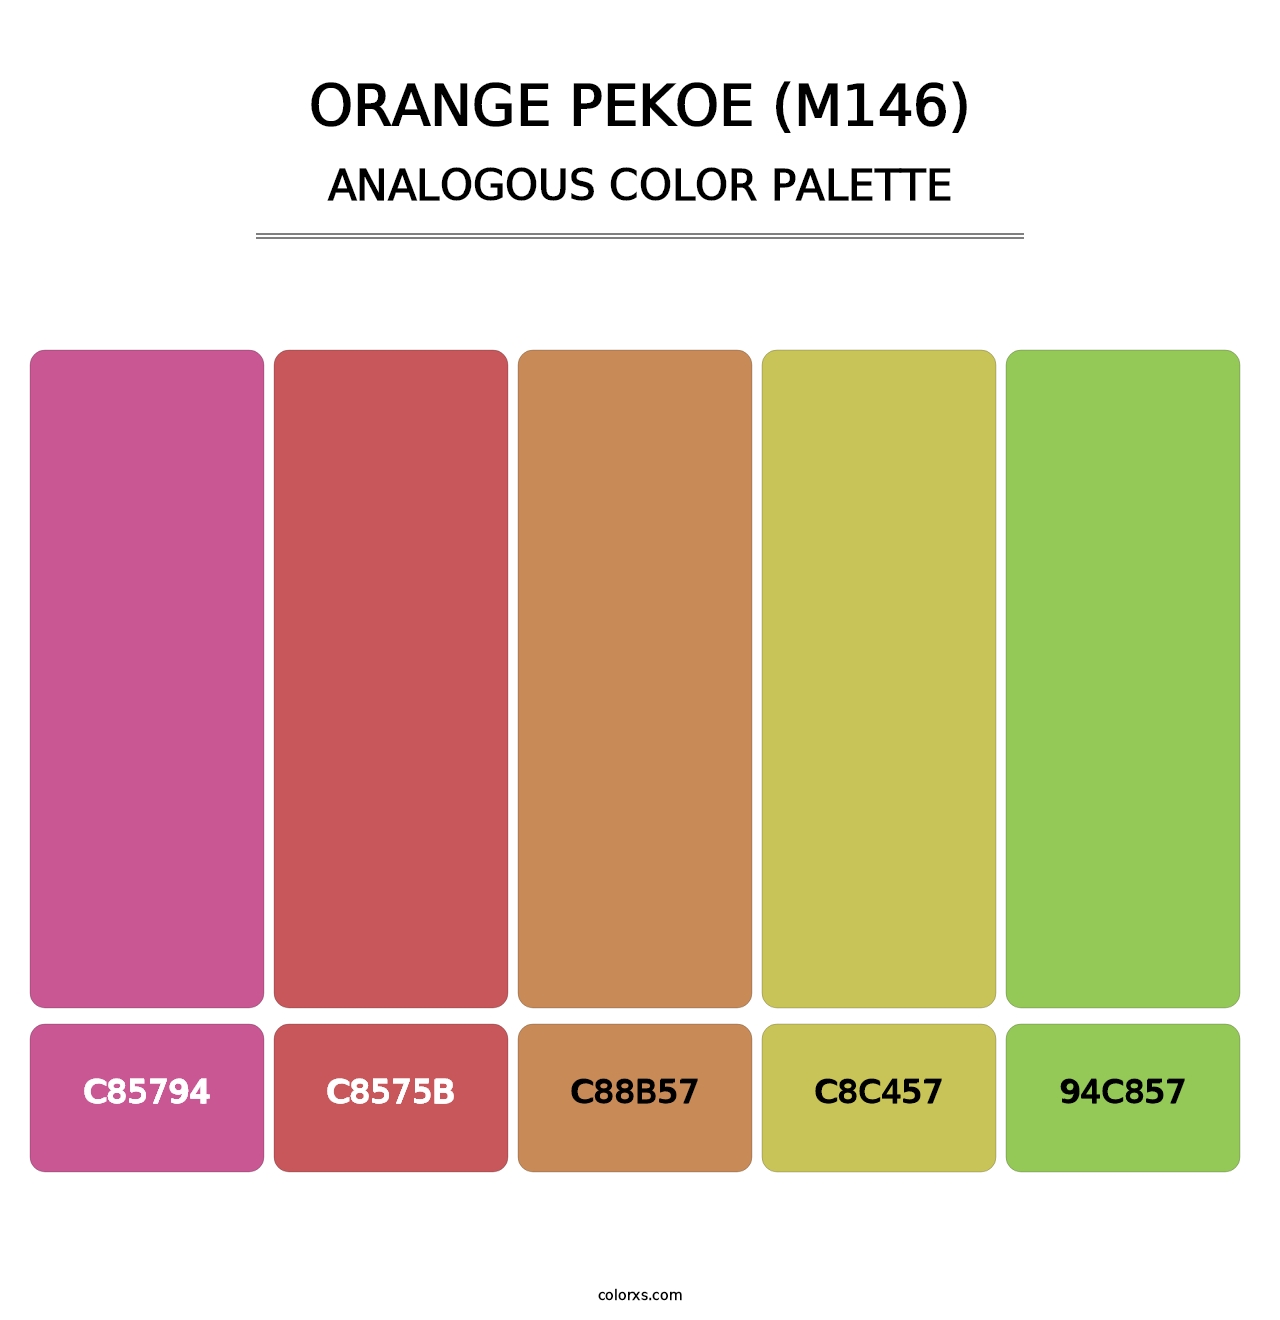 Orange Pekoe (M146) - Analogous Color Palette